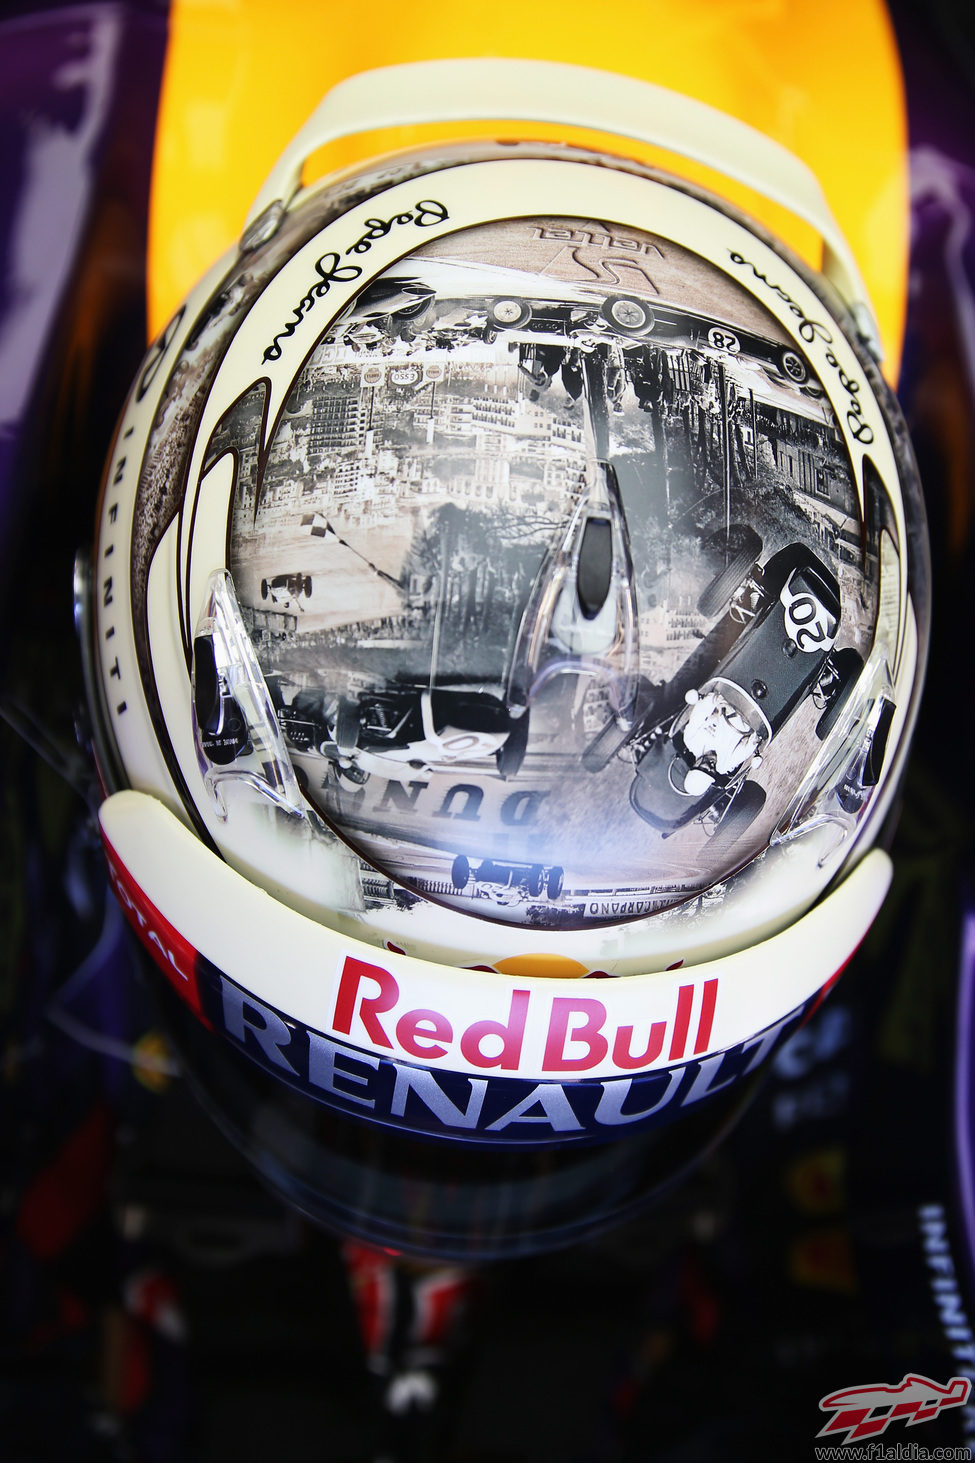 Detalles en el casco de Sebastian Vettel para Mónaco